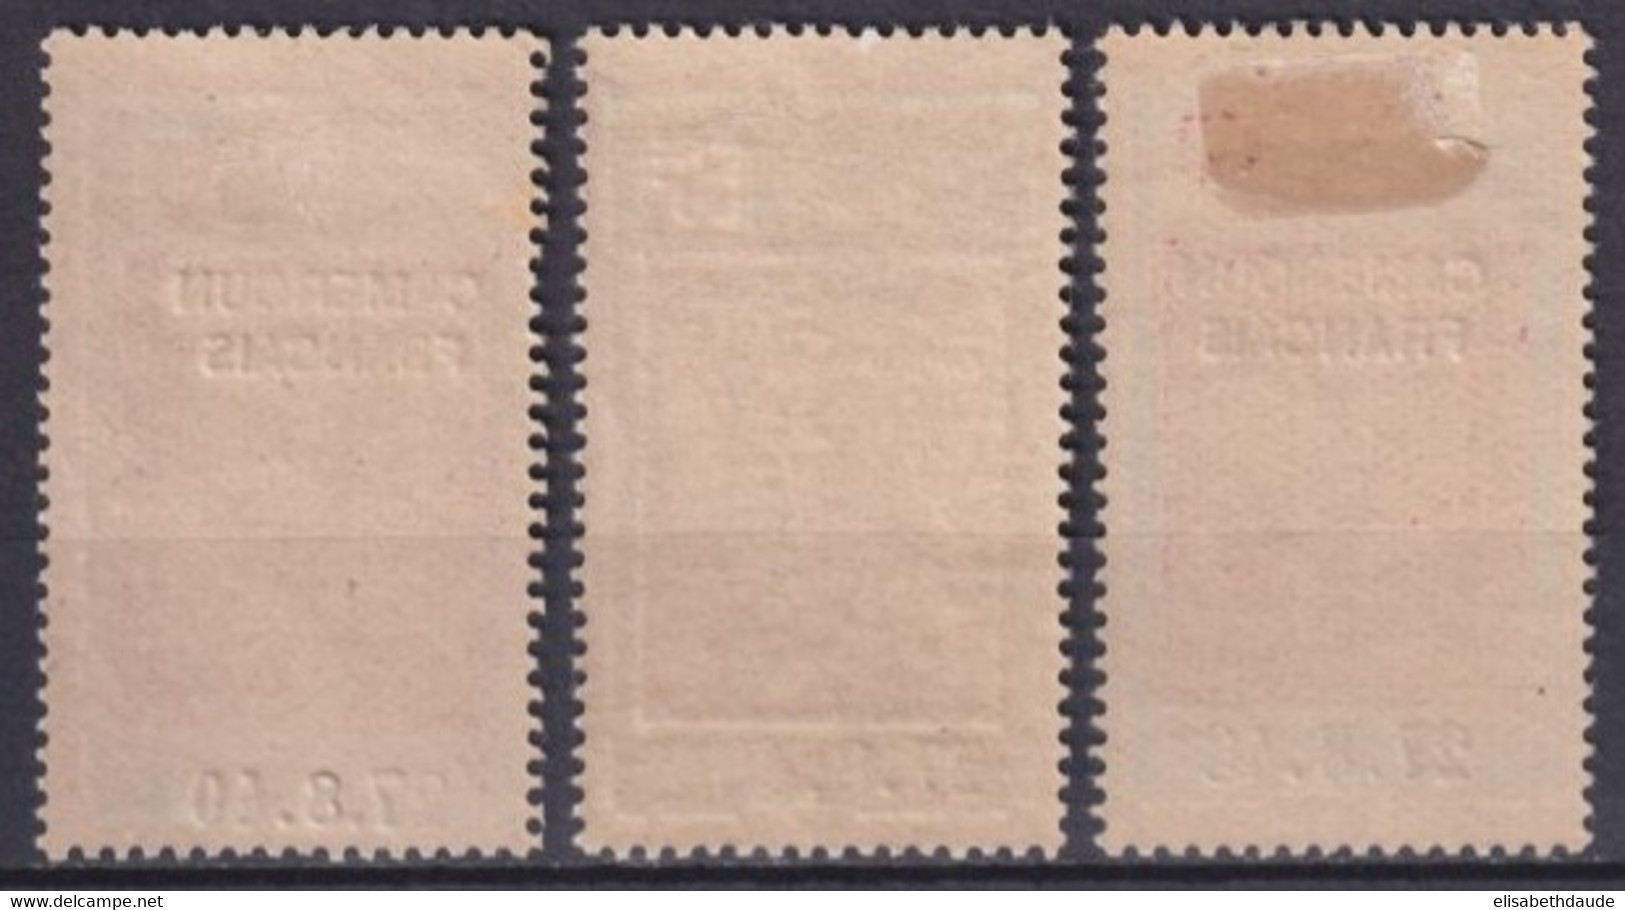 CAMEROUN - 1940 - FRANCE LIBRE - VARIETES GROS "8"+2 "BOUCLE" Et GROS "0" Dans 27.8.40 + NORMAL - YVERT N°202 * MLH - Neufs